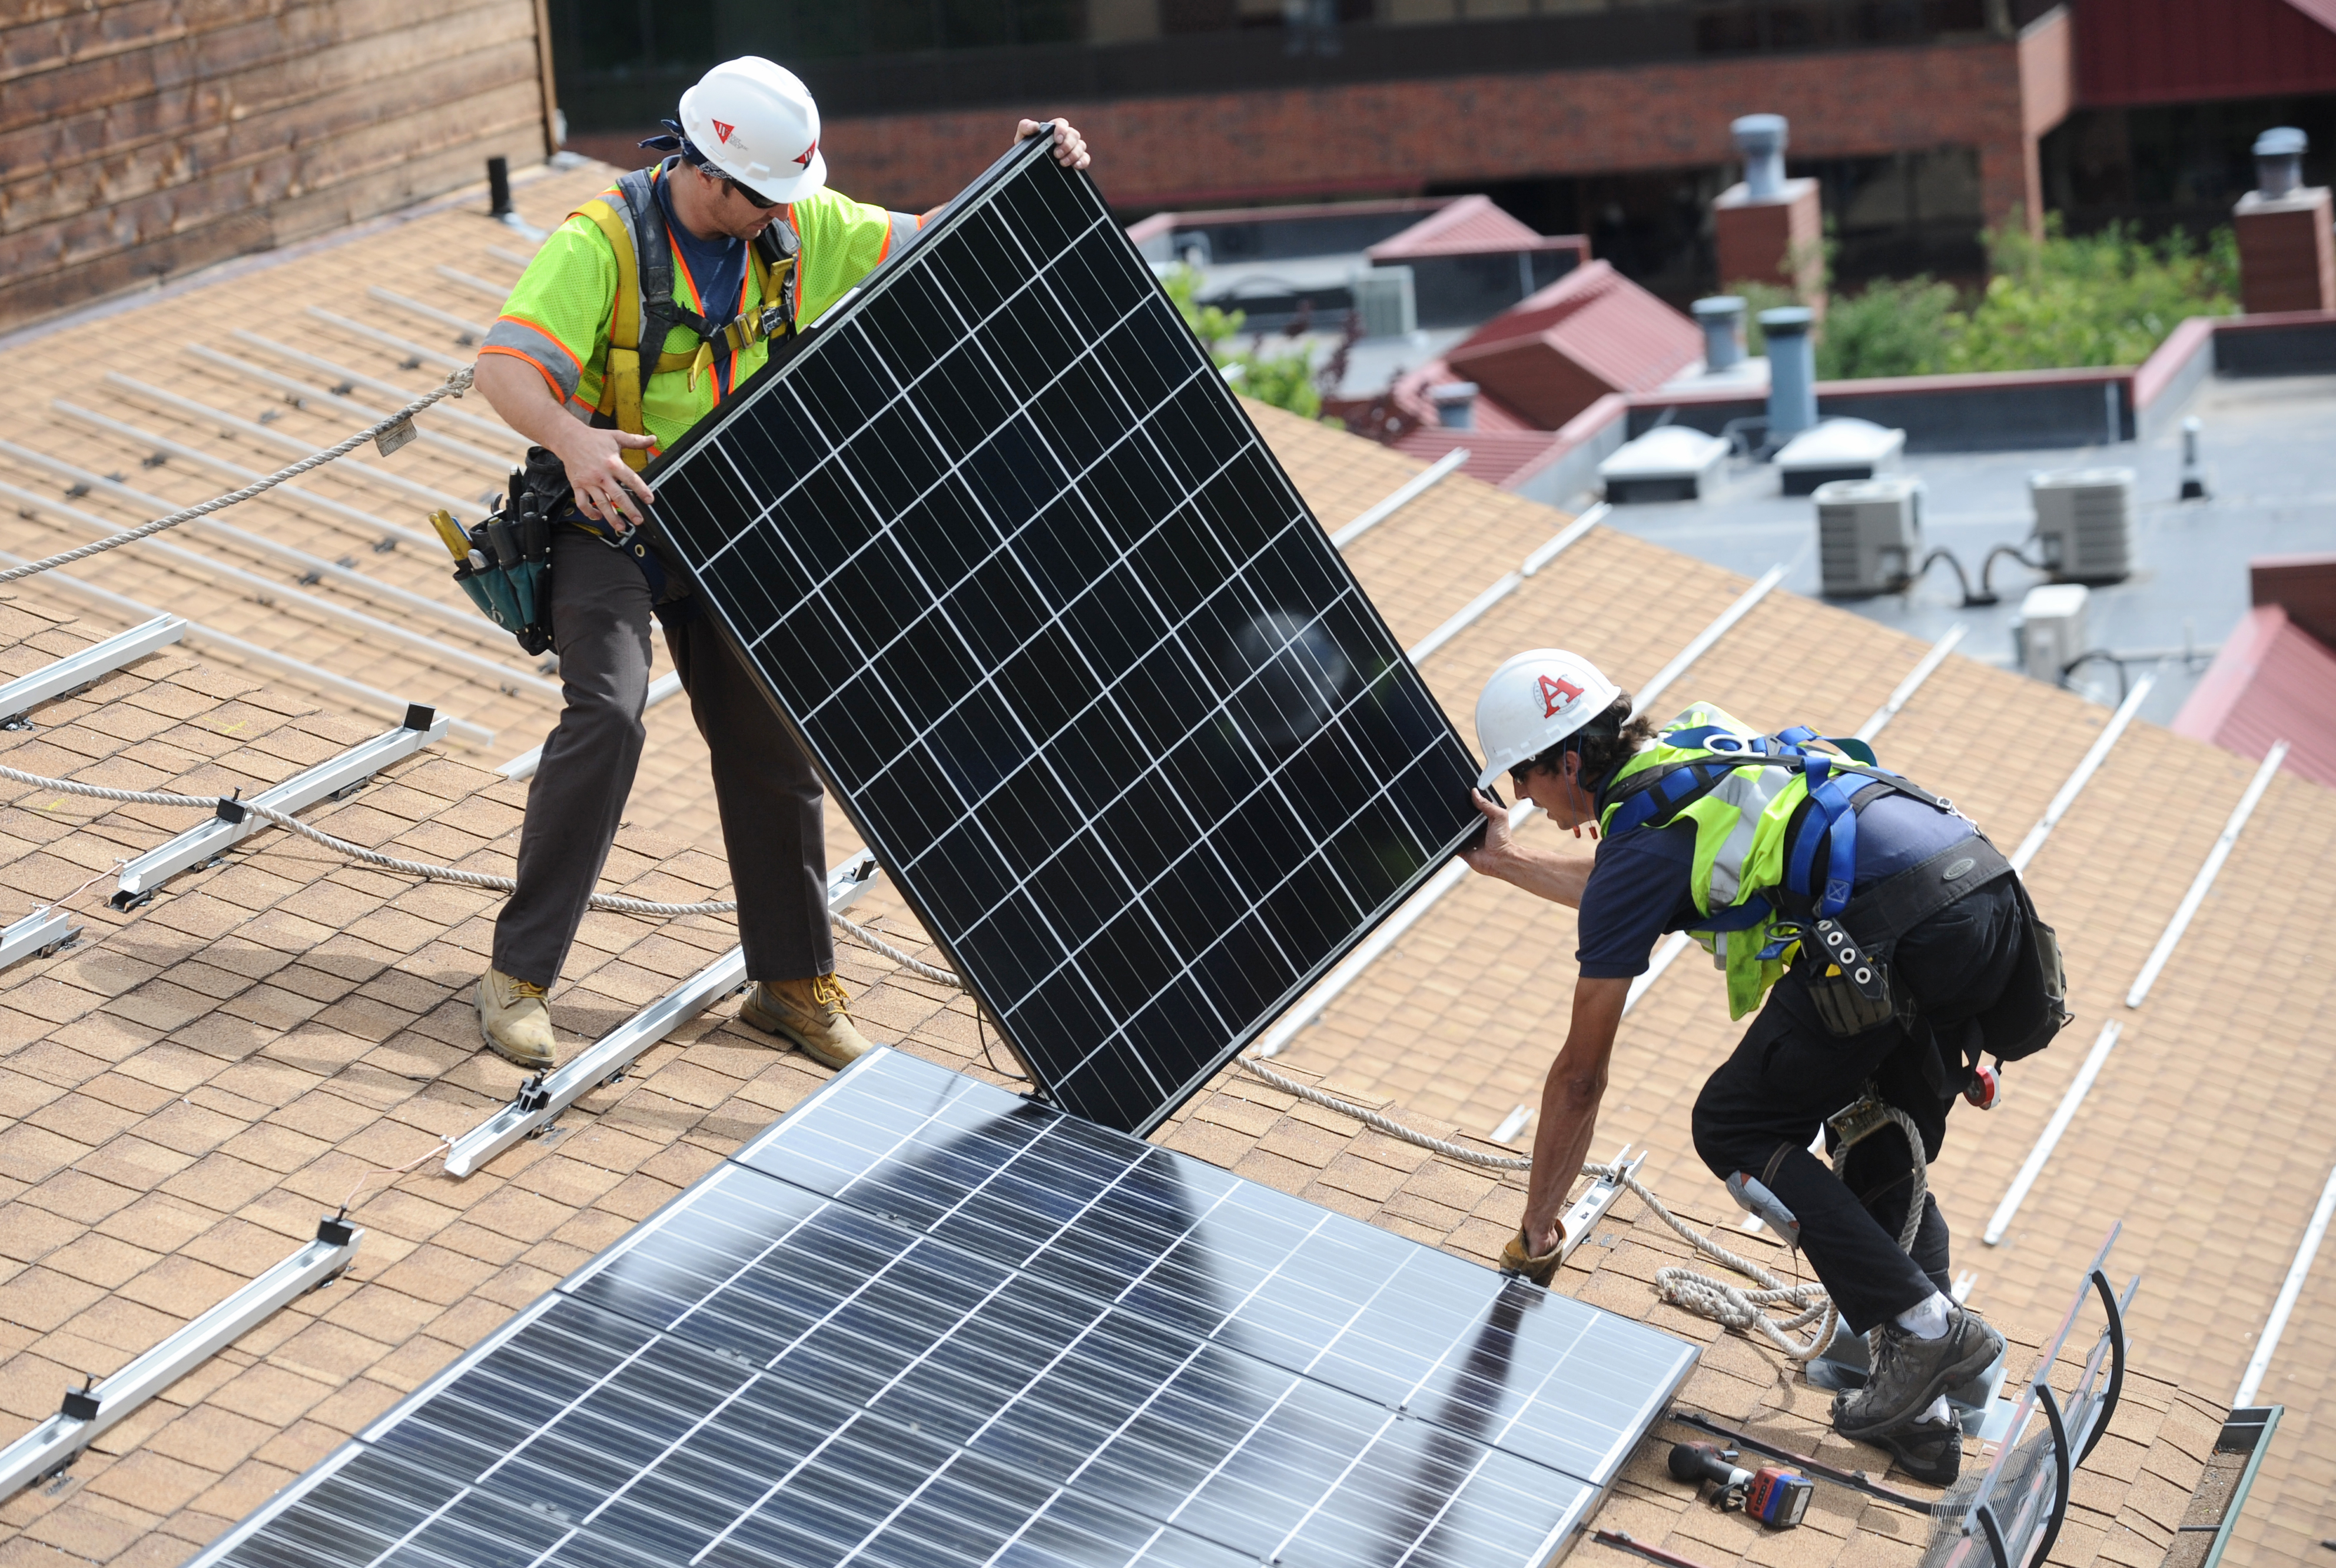 Crew يقوم بتركيب الألواح الشمسية على مبنى سكني.